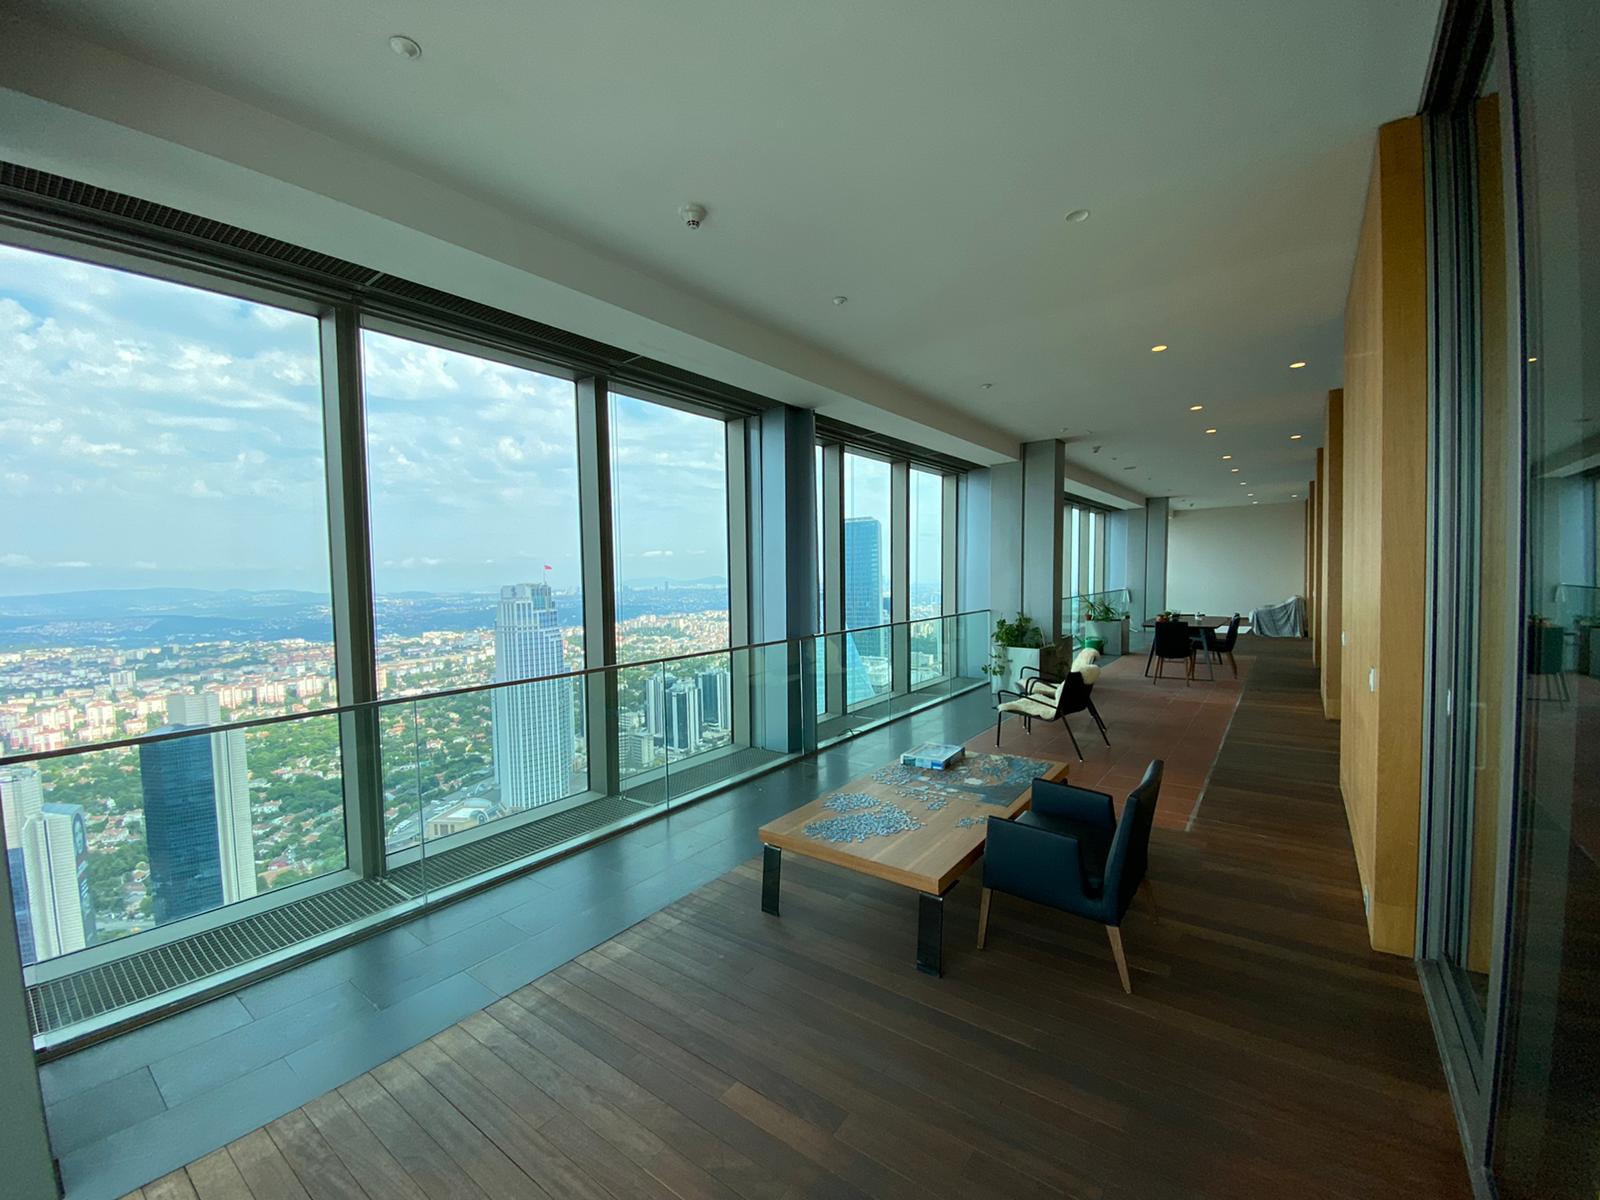 Sapphire Tower Penthouse Bosphorus View